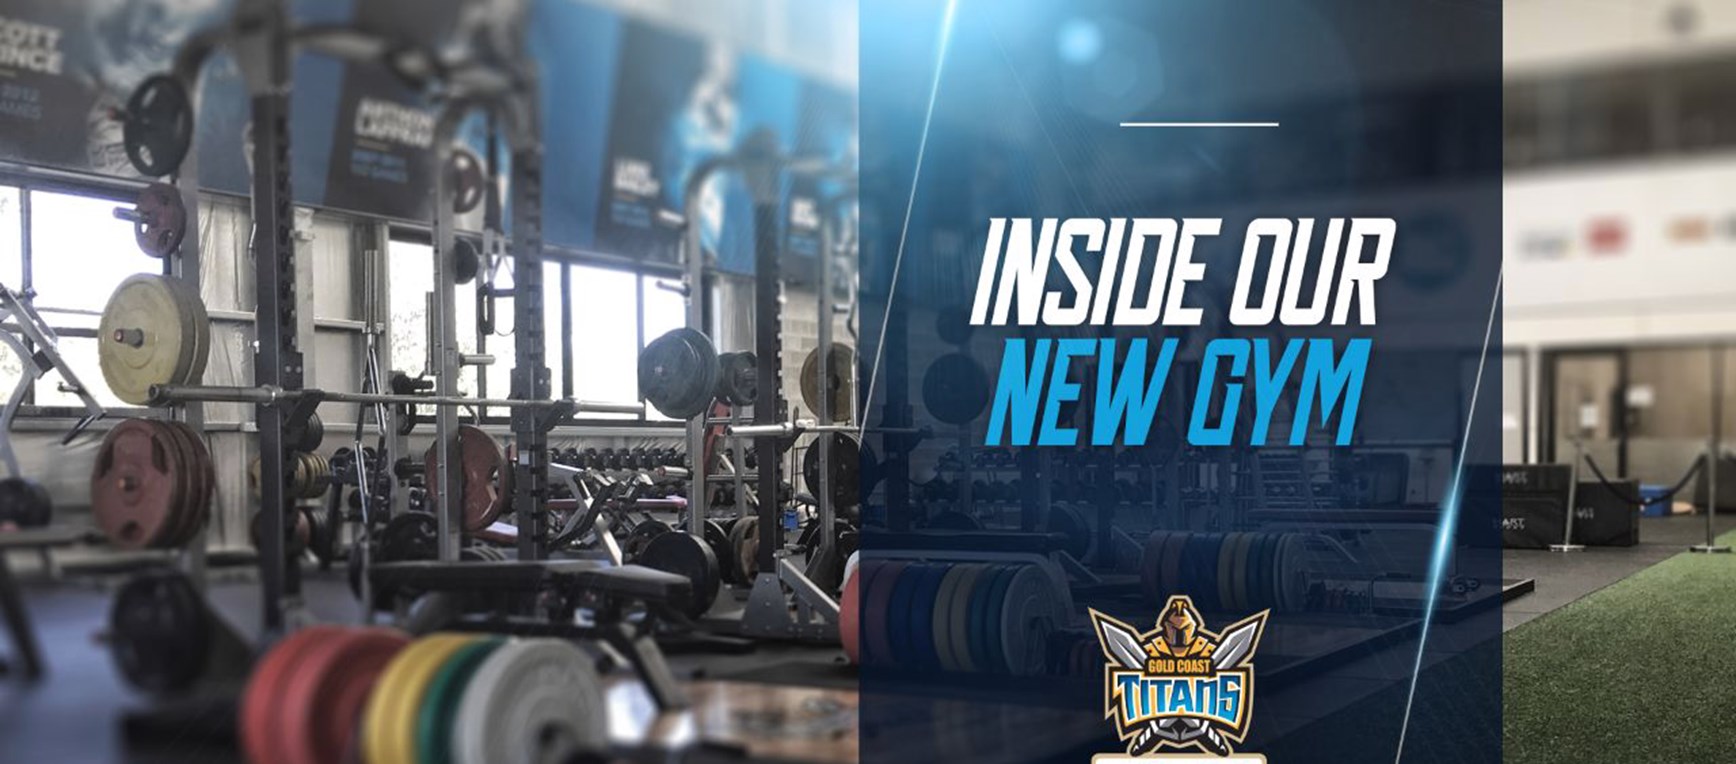 SNEAK PEEK: Take a look inside our new Gym